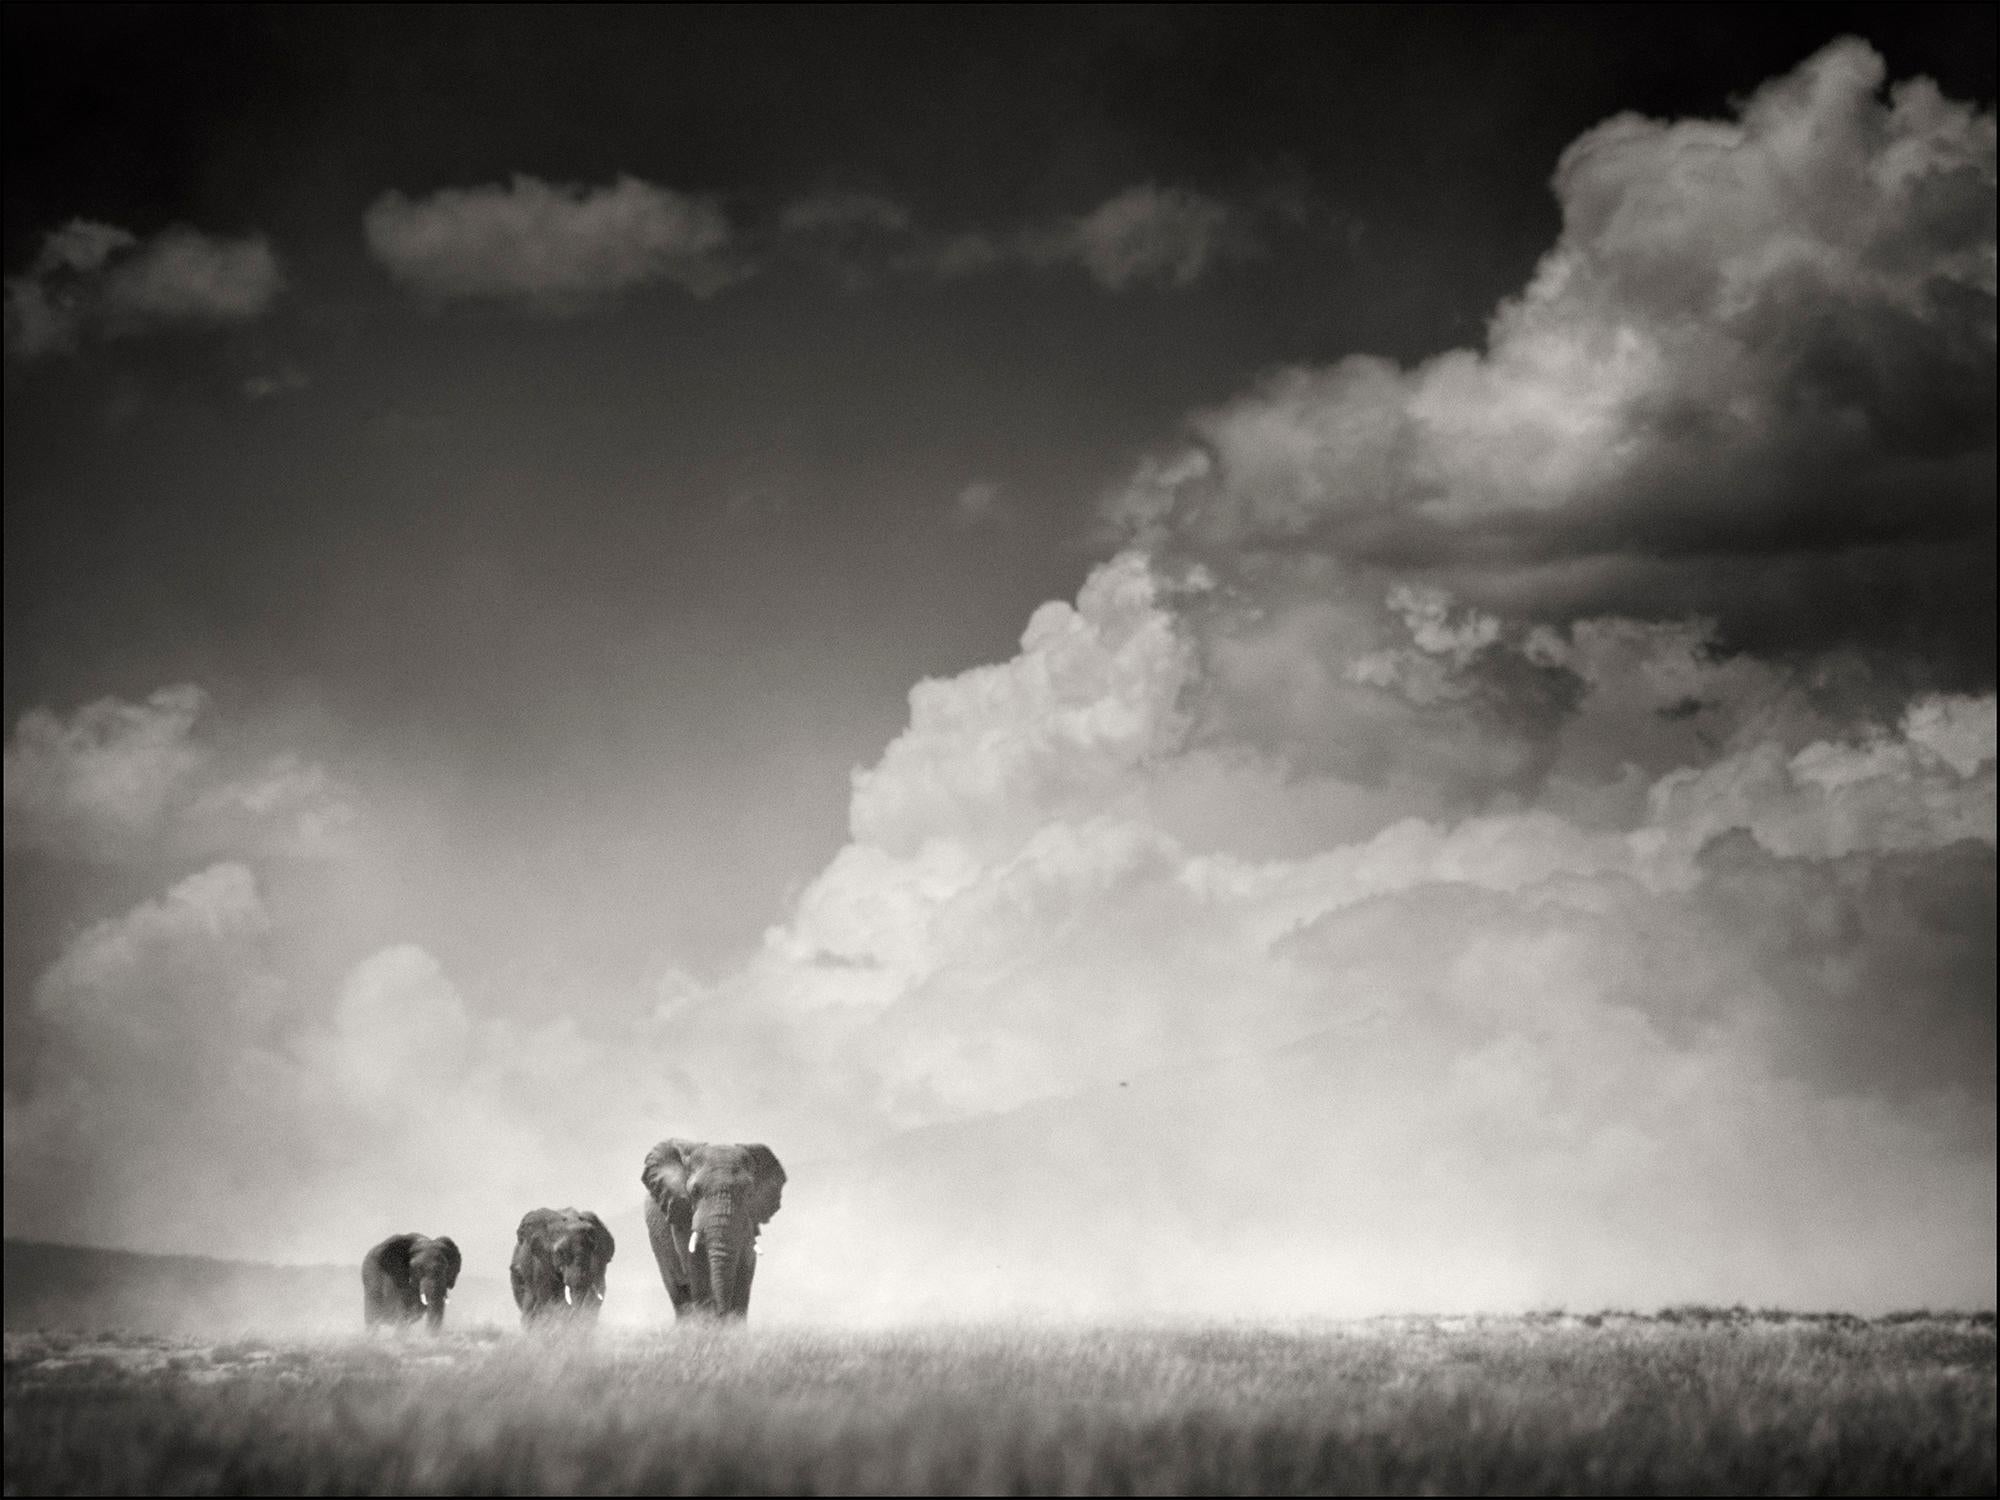 The wild bunch, Elephant, wildlife, Africa, Landscape - Photograph by Joachim Schmeisser